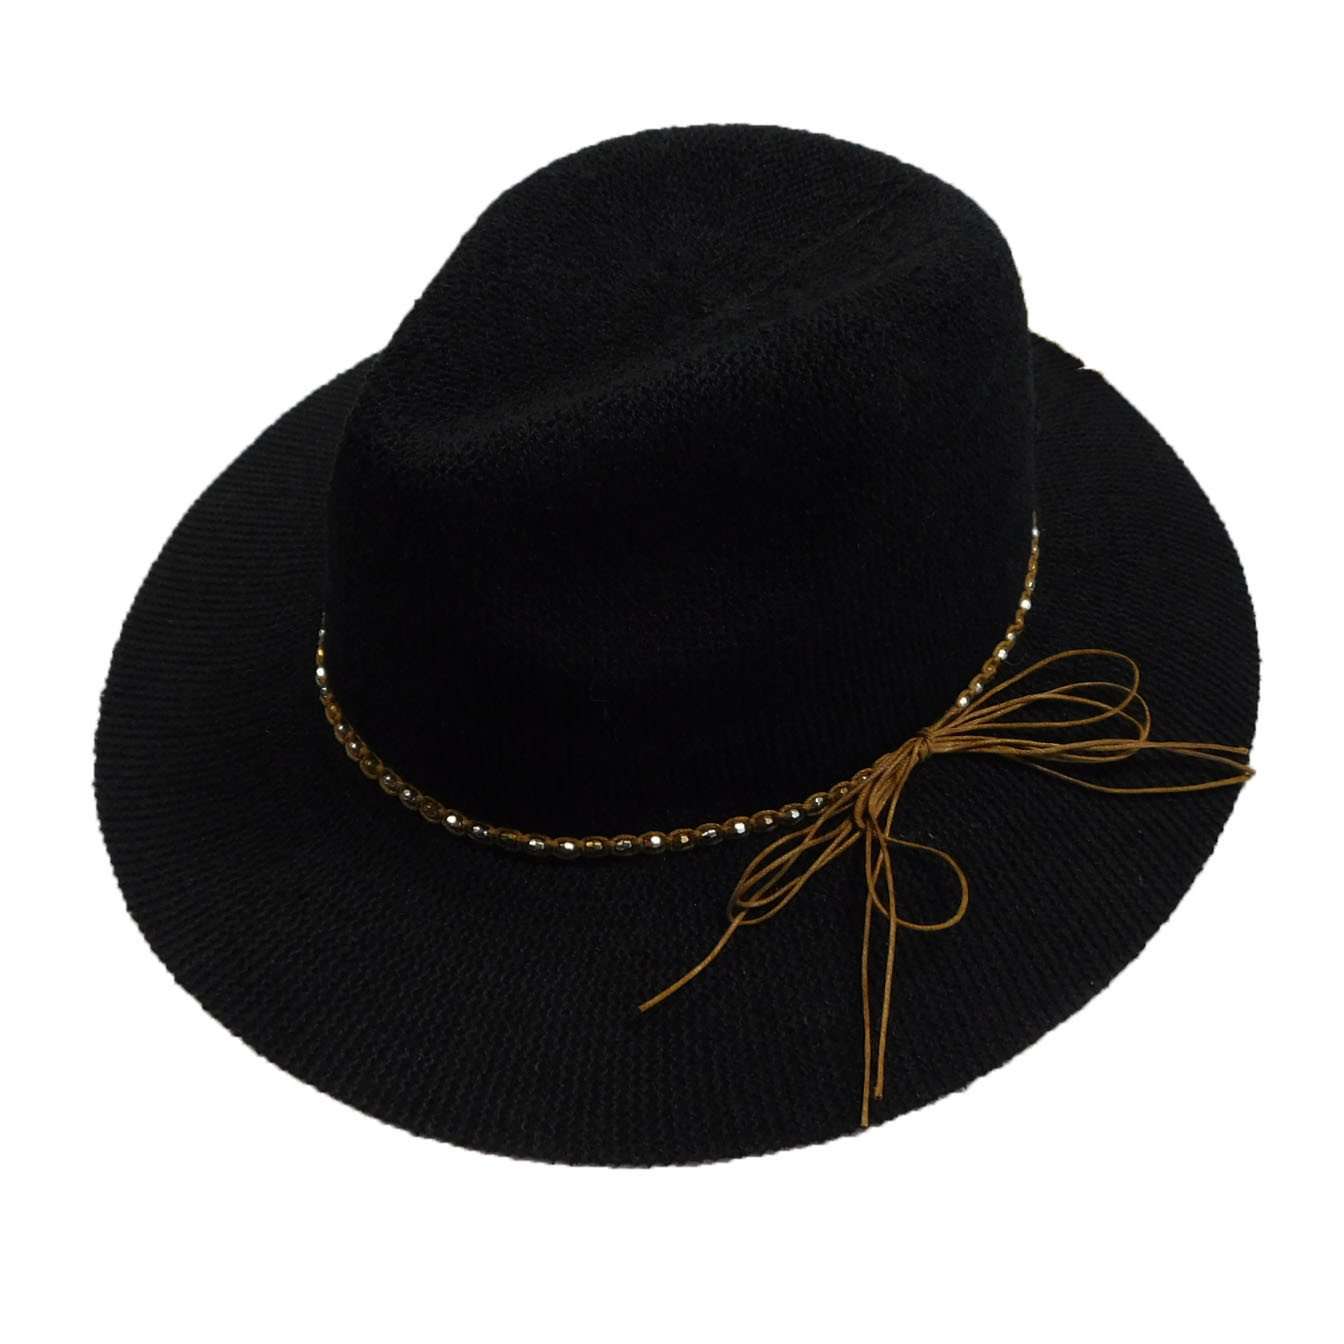 Knitted Panama Hat with Beaded Band - Black Safari Hat Boardwalk Style Hats WWda3122BK Black Medium (57 cm) 